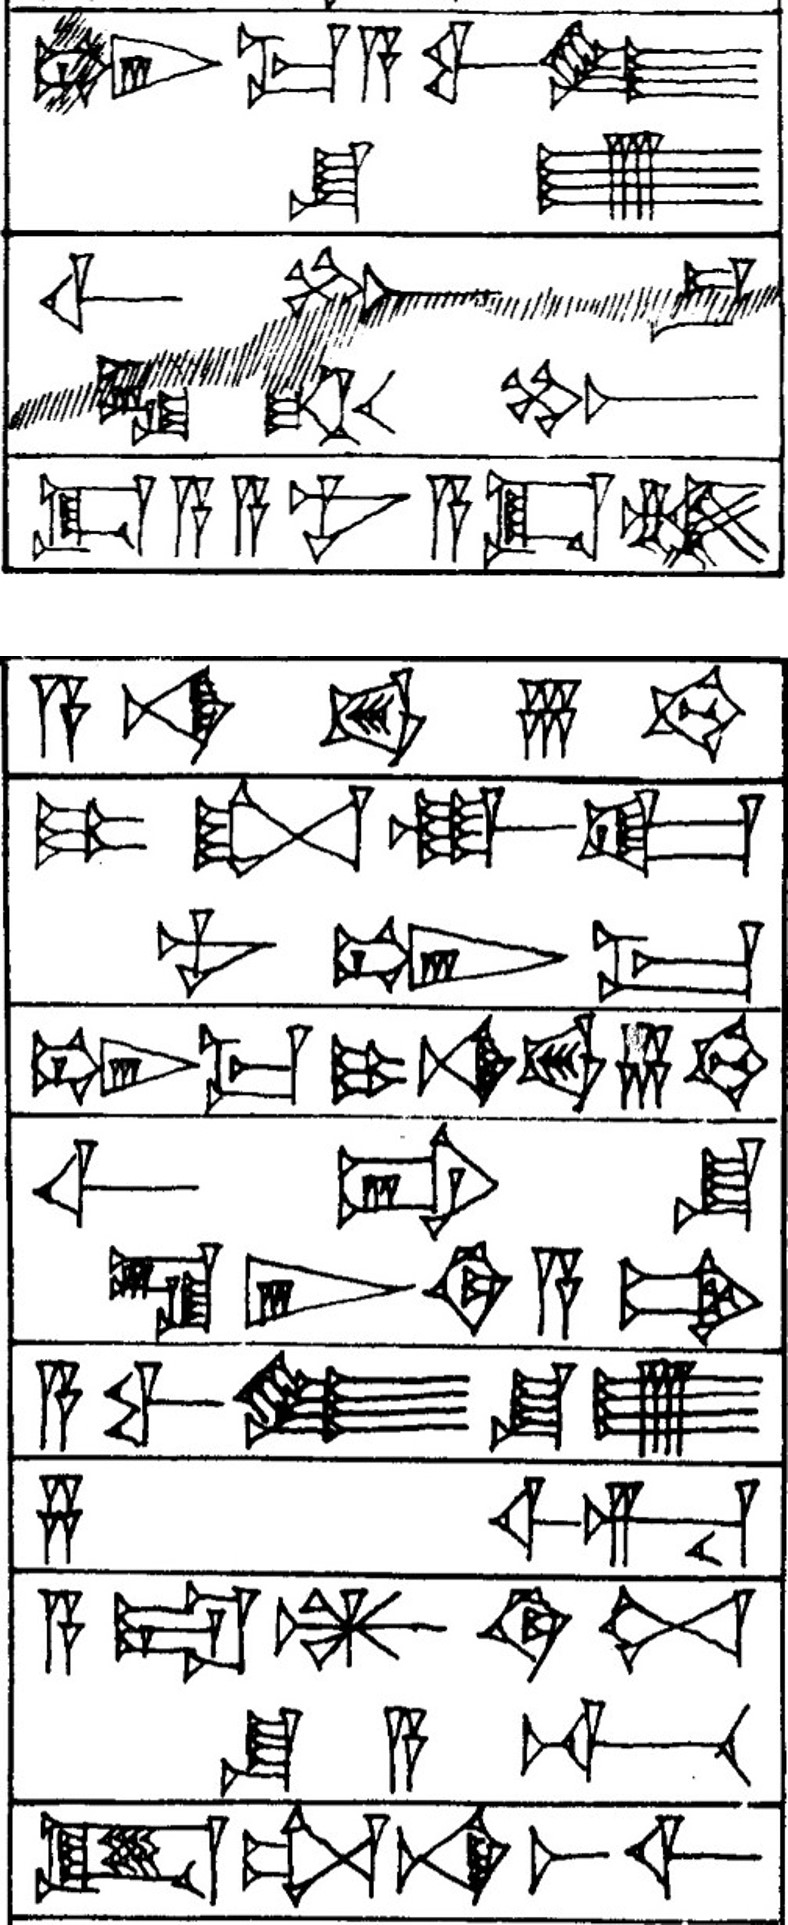 Law § 13 - Cuneiform - Law Code of Hammurabi